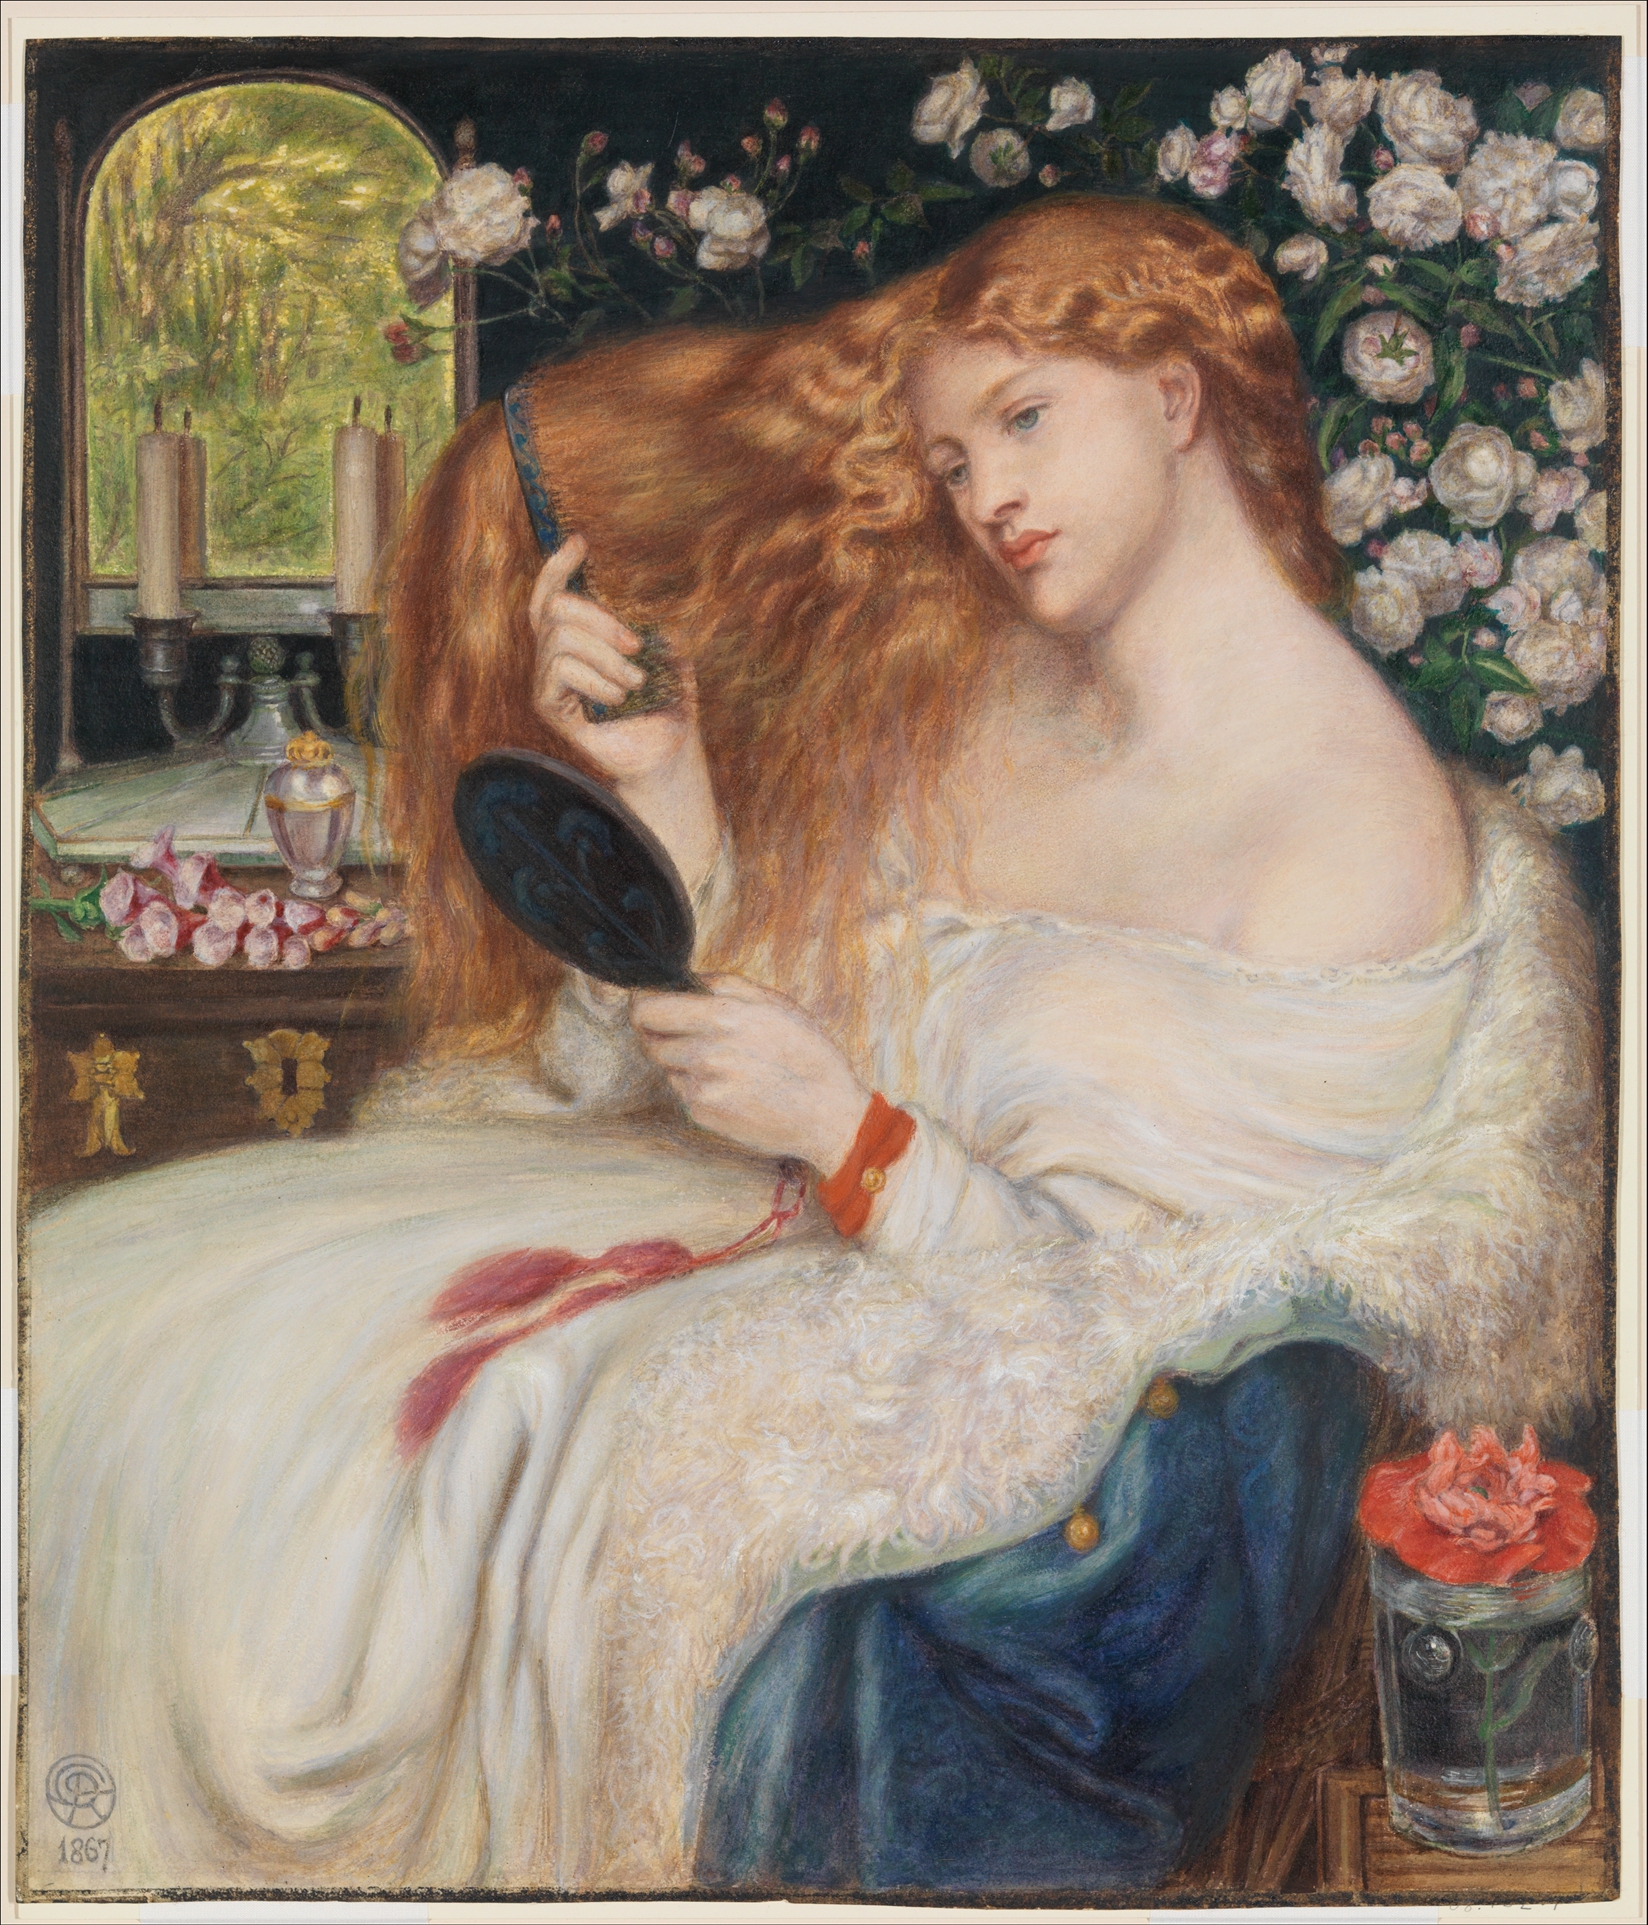 Lady Lilith by Dante Gabriel Rossetti - 1867 - 51,3 x 44 cm Museo Metropolitano de Arte